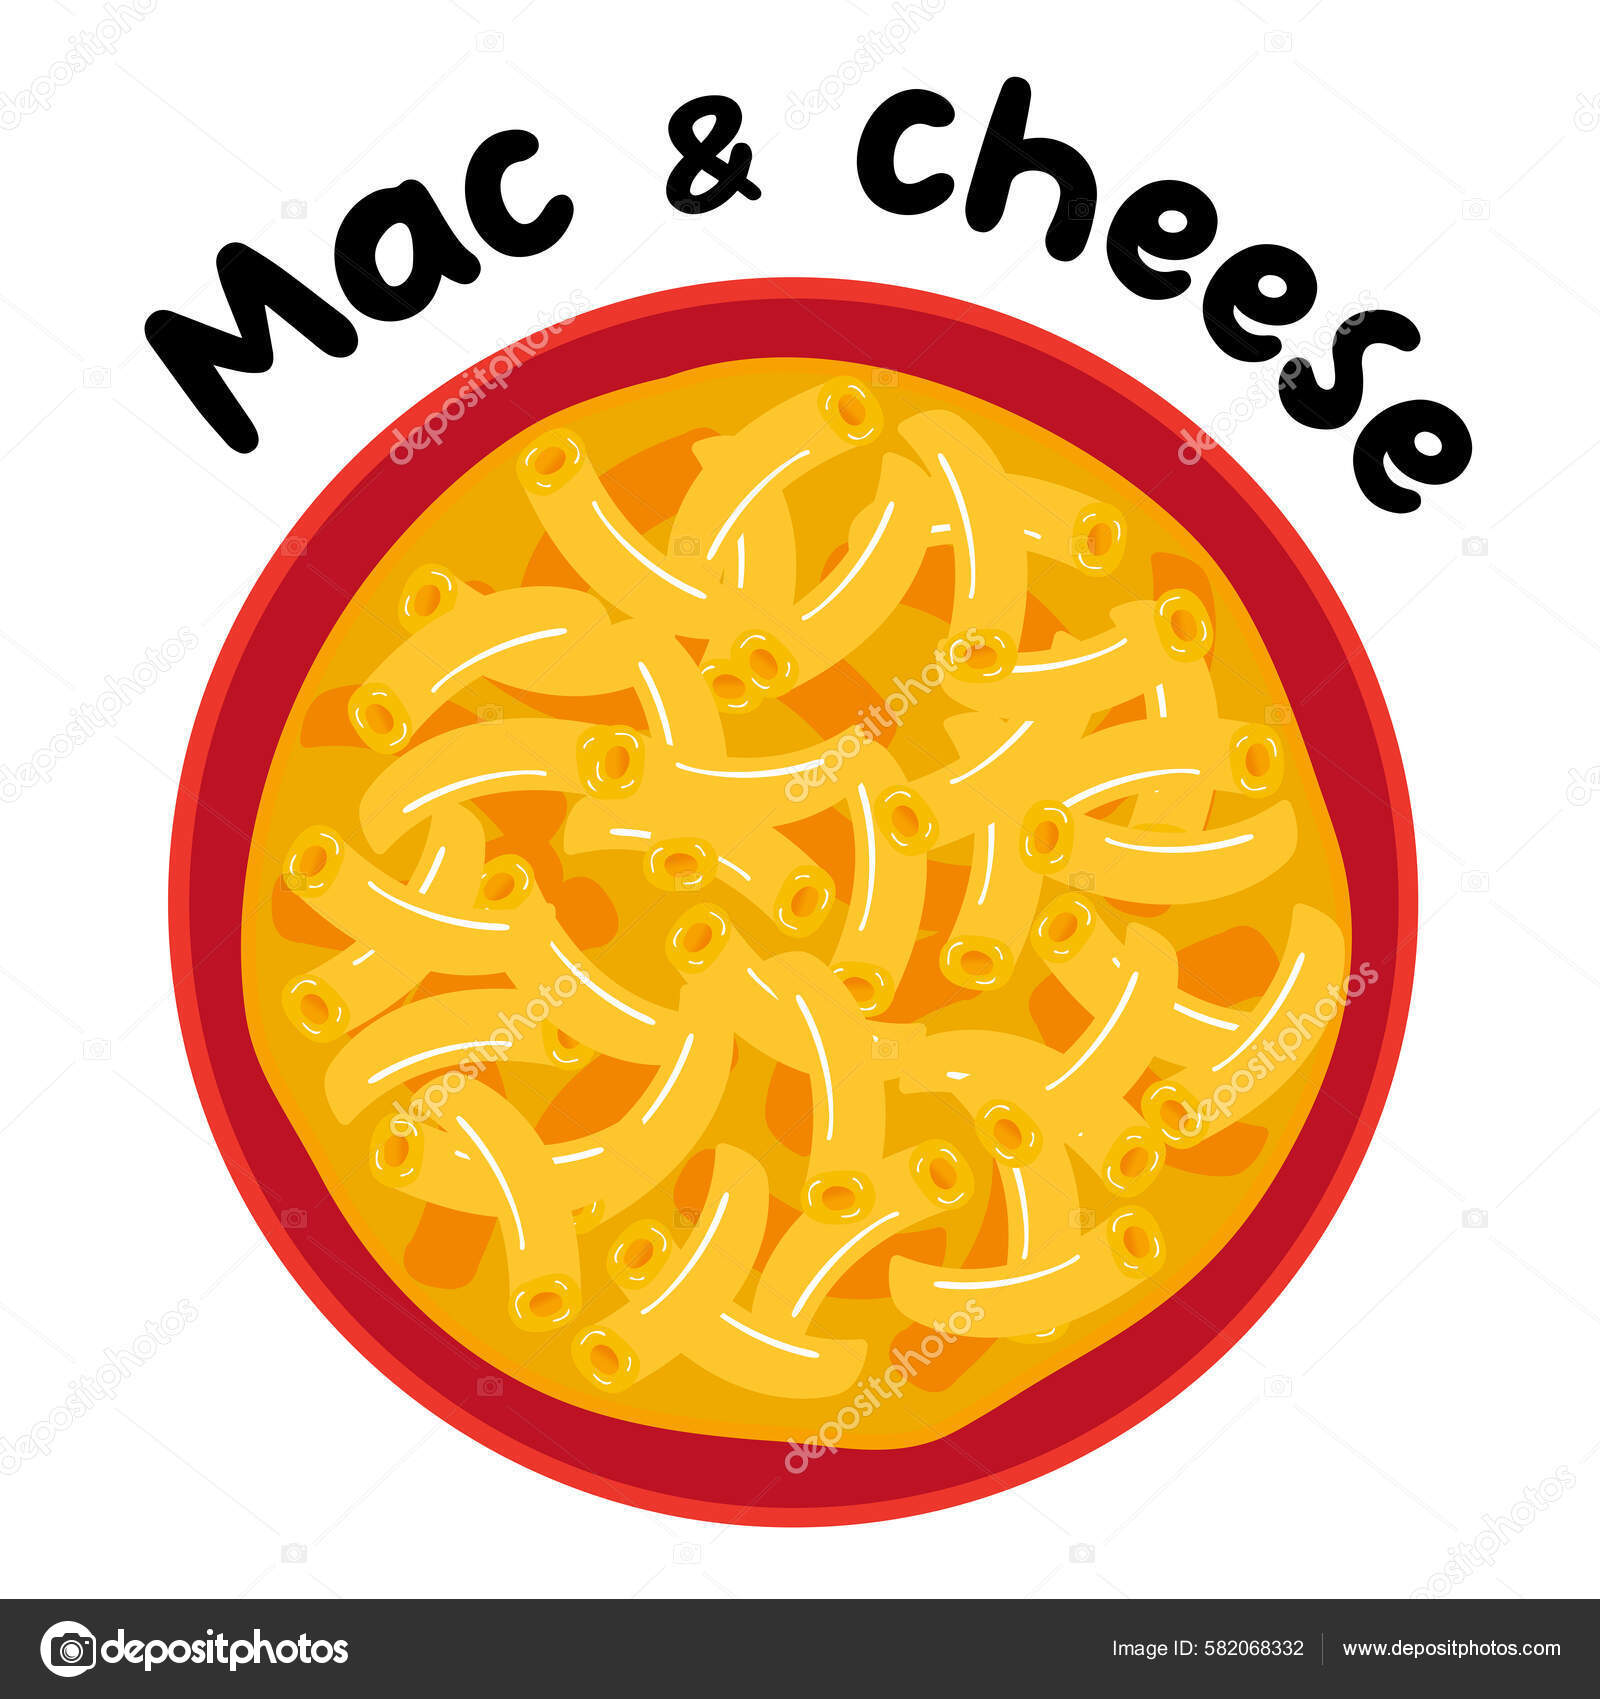 macaroni and cheese cartoon